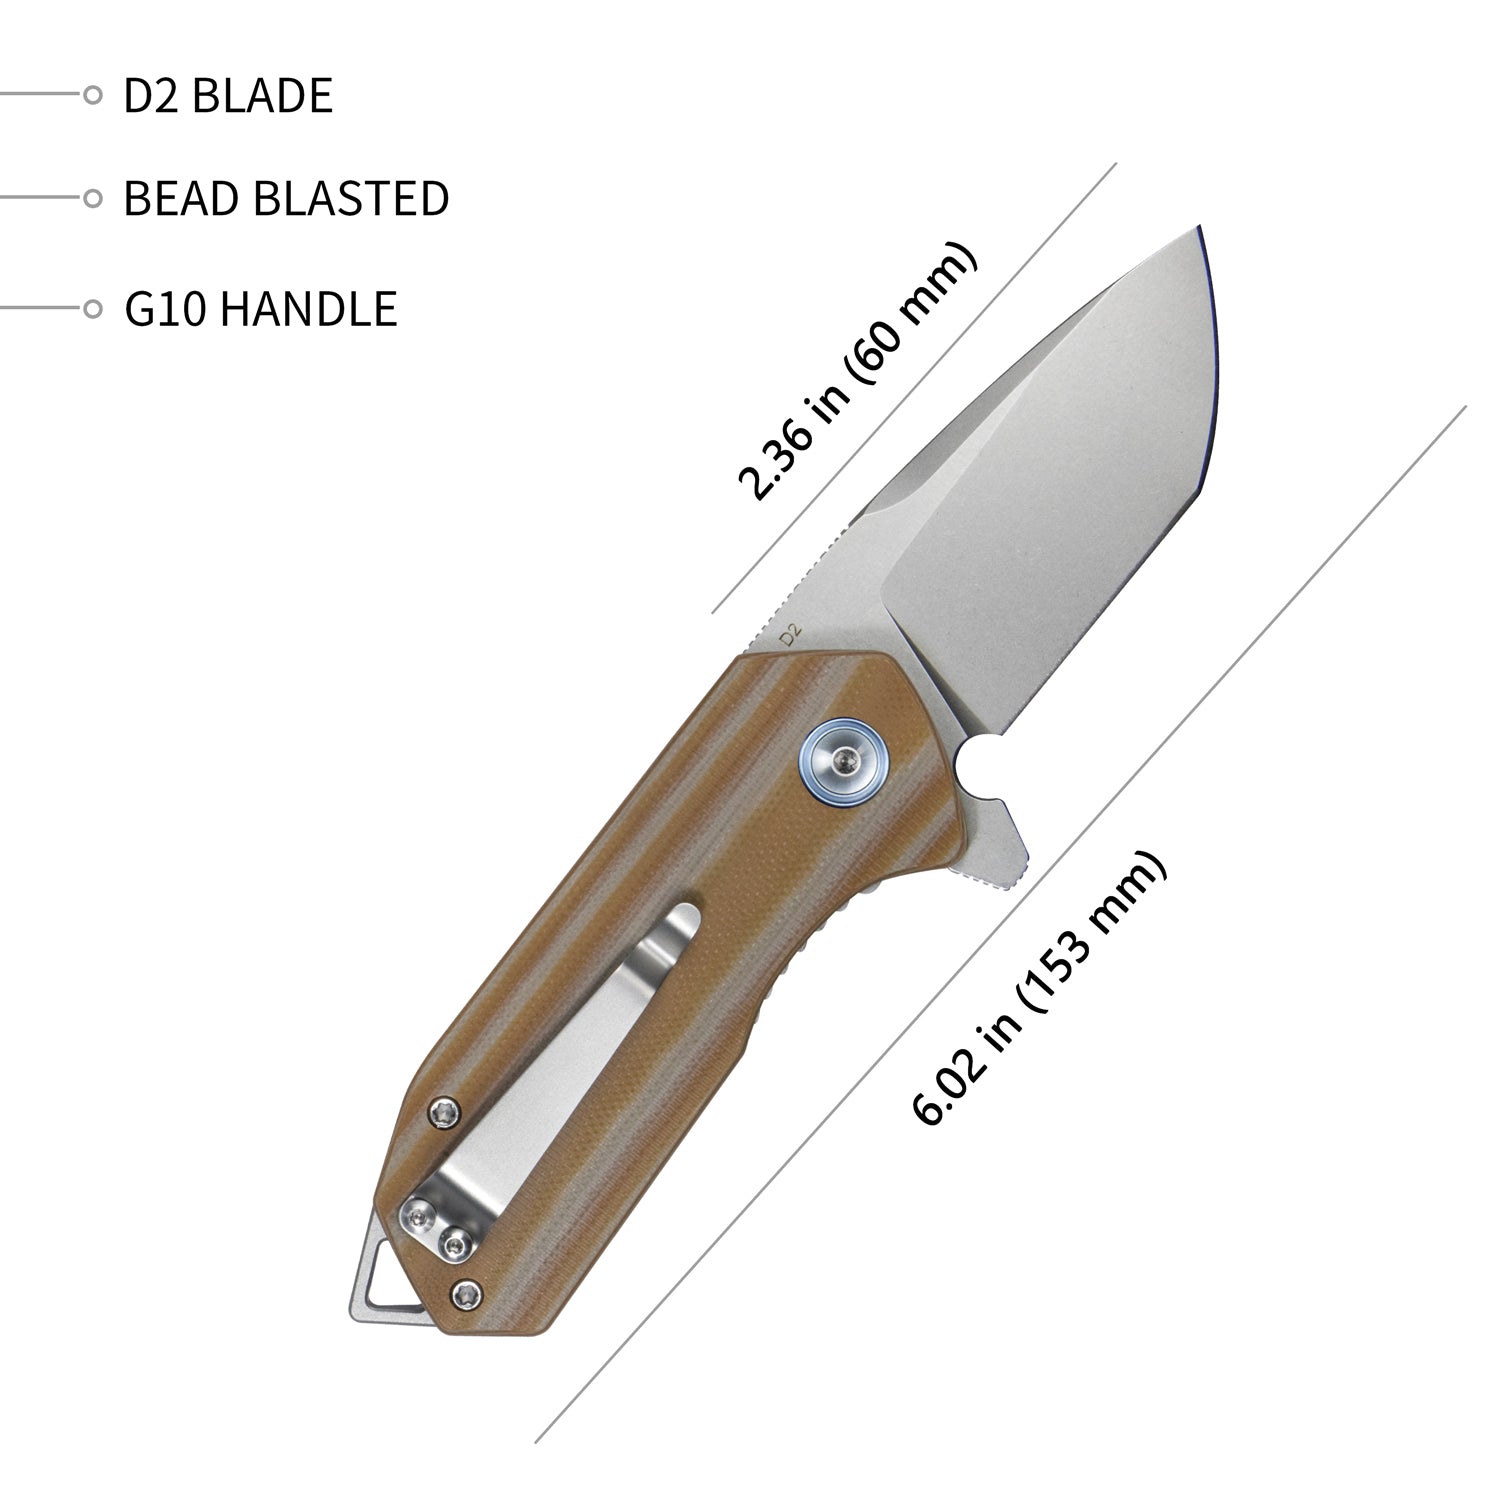 Kubey Campe Klappmesser Nest Liner Lock EDC Flipper Knife Striped Beige G10 Handle 2.36" Sandblast D2 KU203F